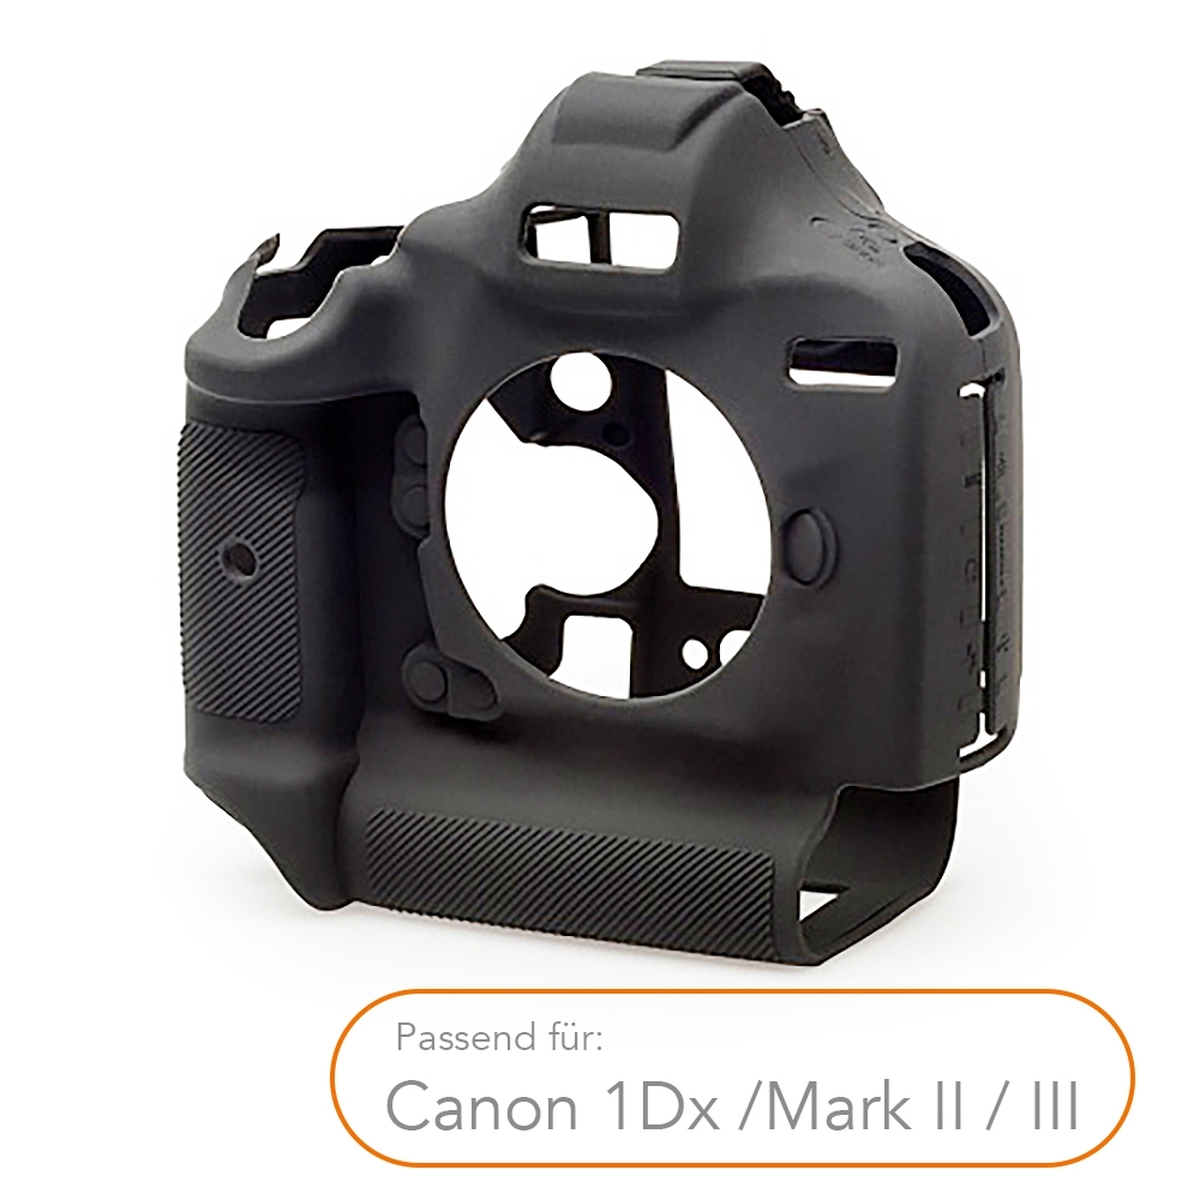 Walimex pro easyCover per Canon 1Dx /Mark II / III